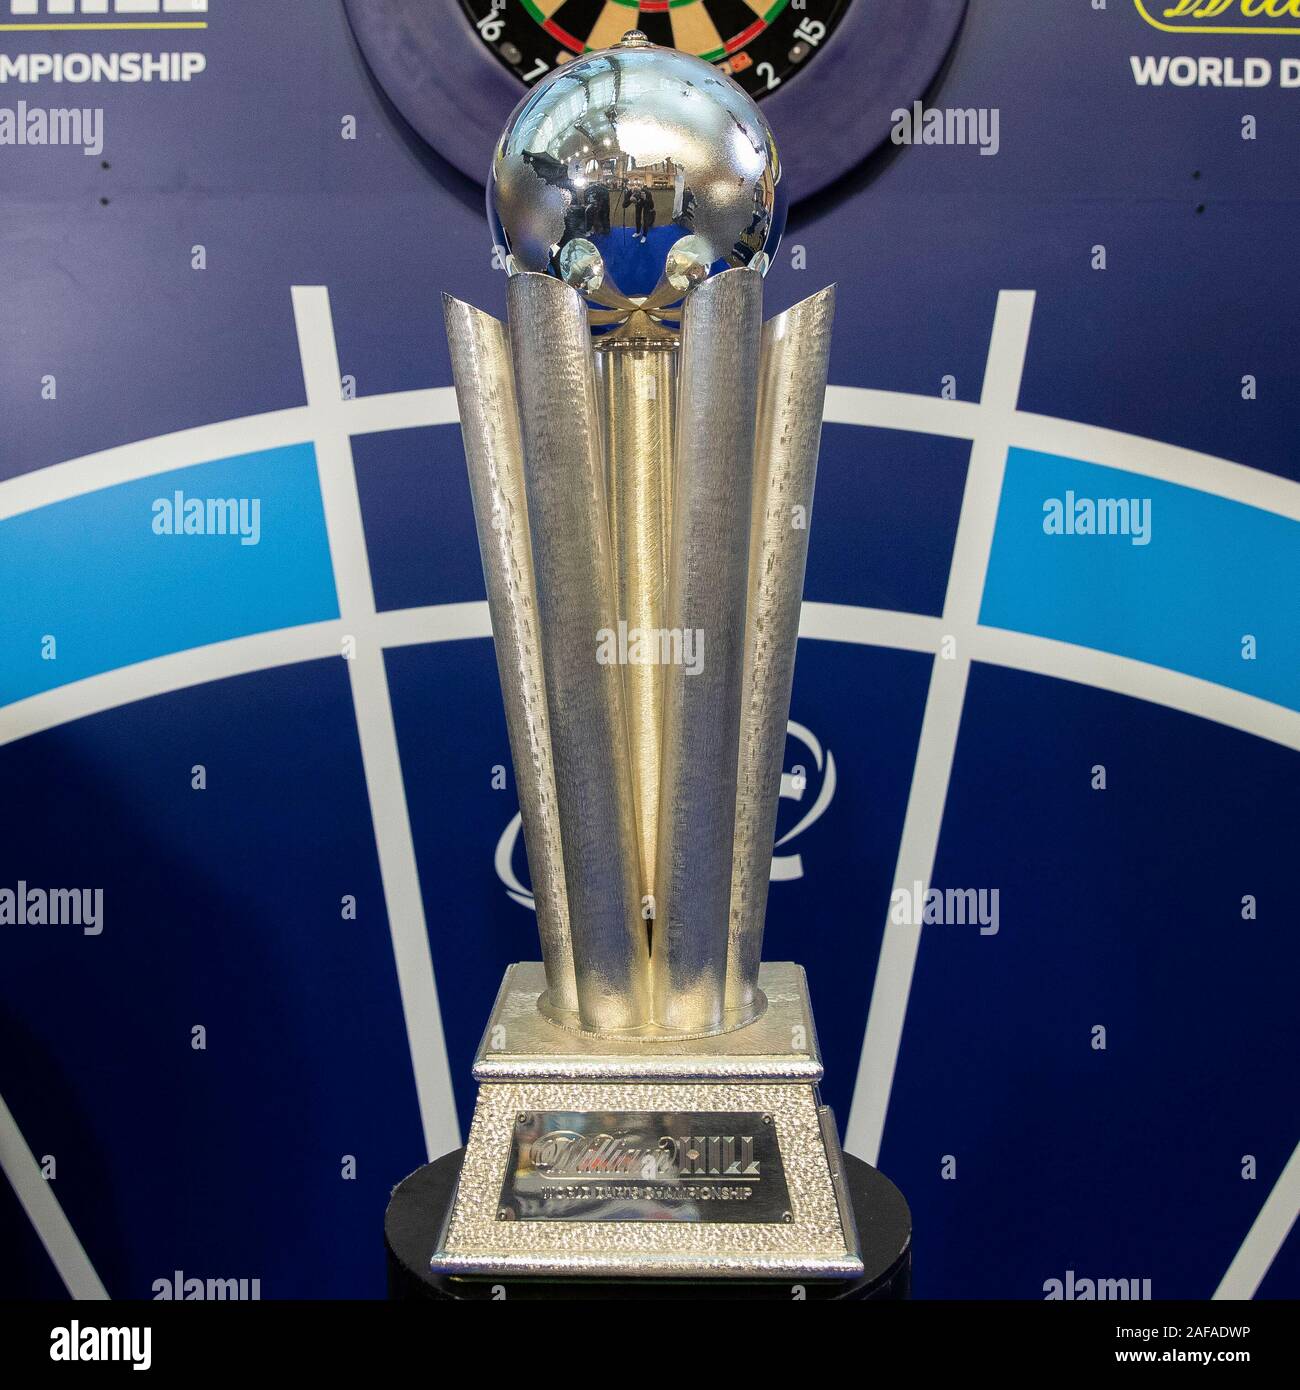 world championship darts 2022 results clipart